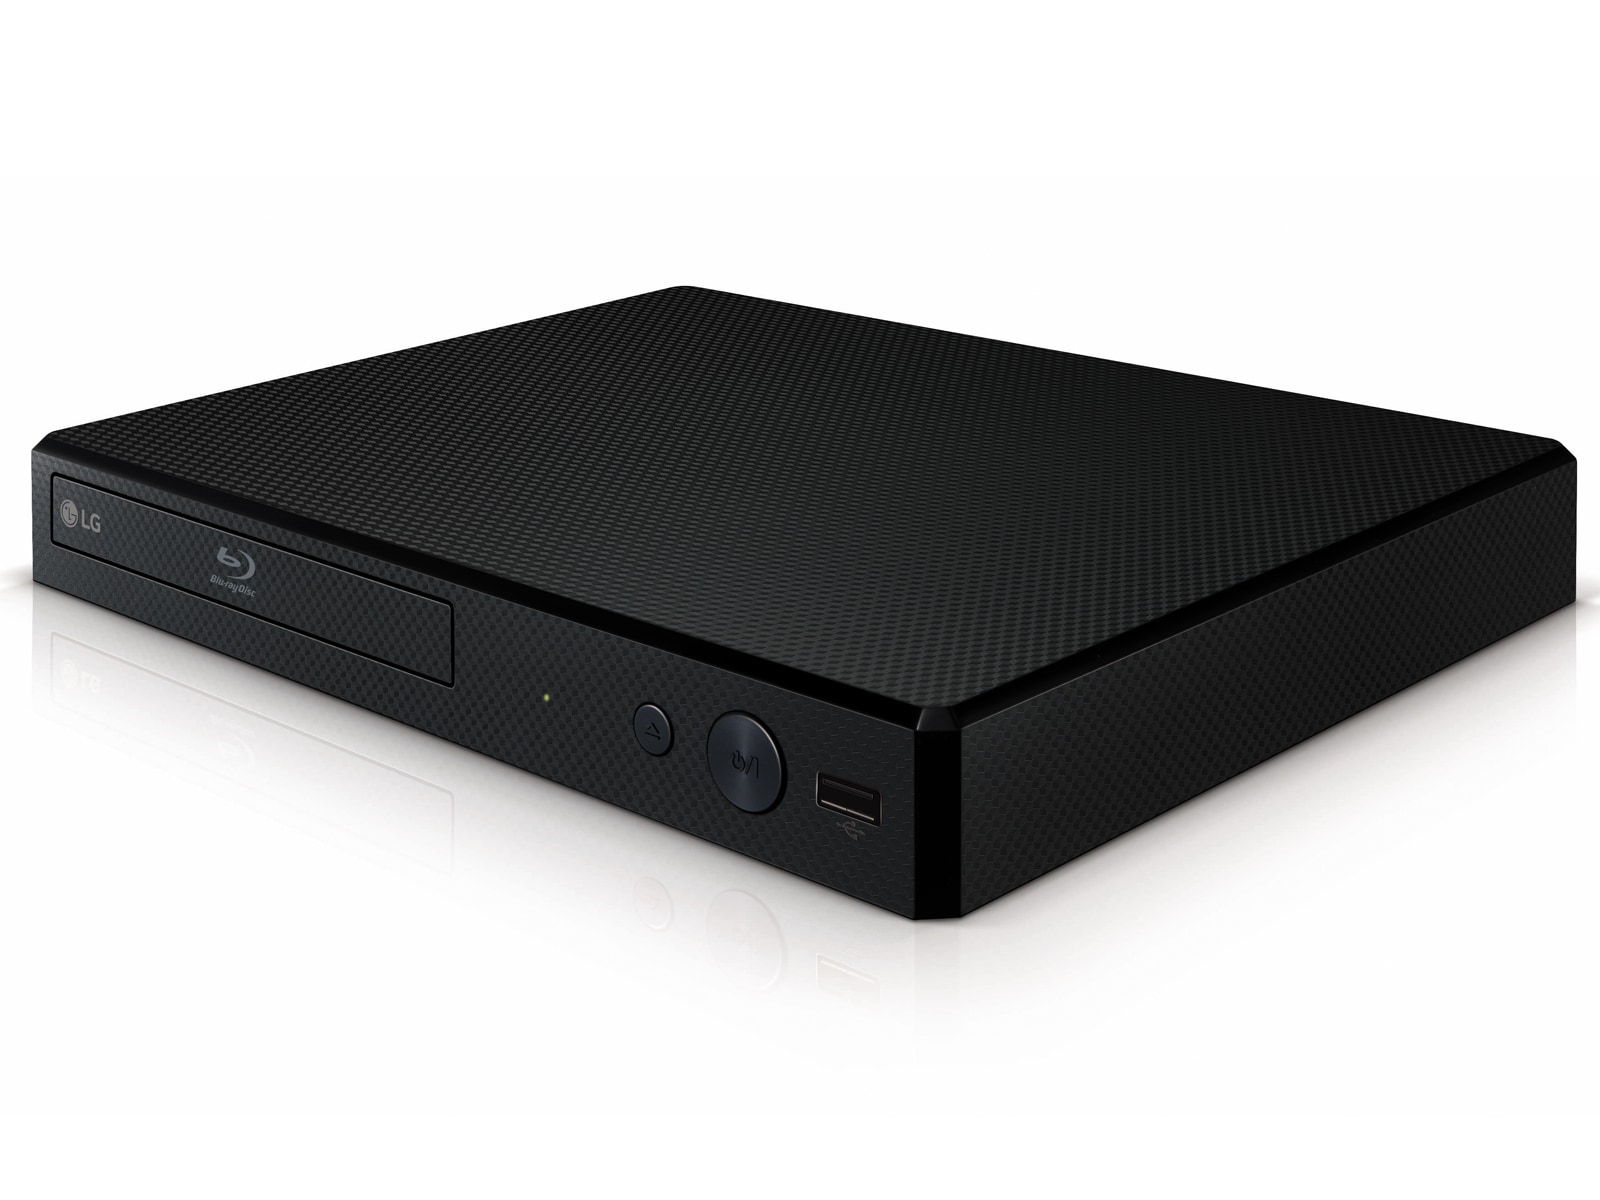 LG Reproductor Blu-ray Disco TM/DVD player, BP250